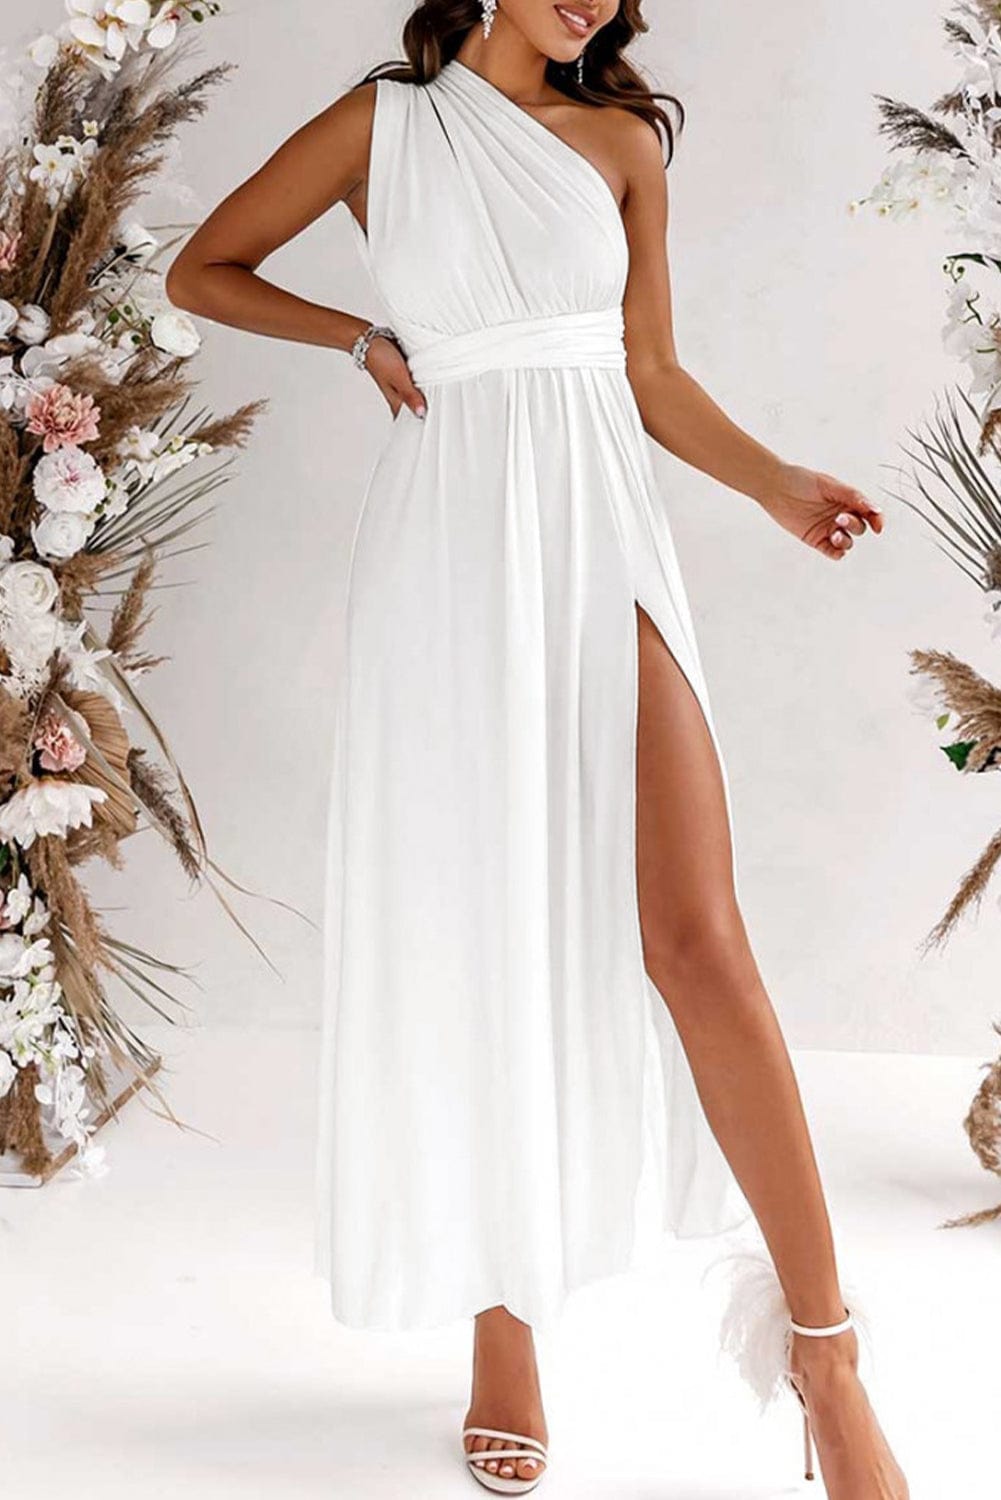 The802Gypsy  dress White / S / 95%Polyester+5%Elastane Traveling Gypsy High Split Cutout Back Maxi Dress